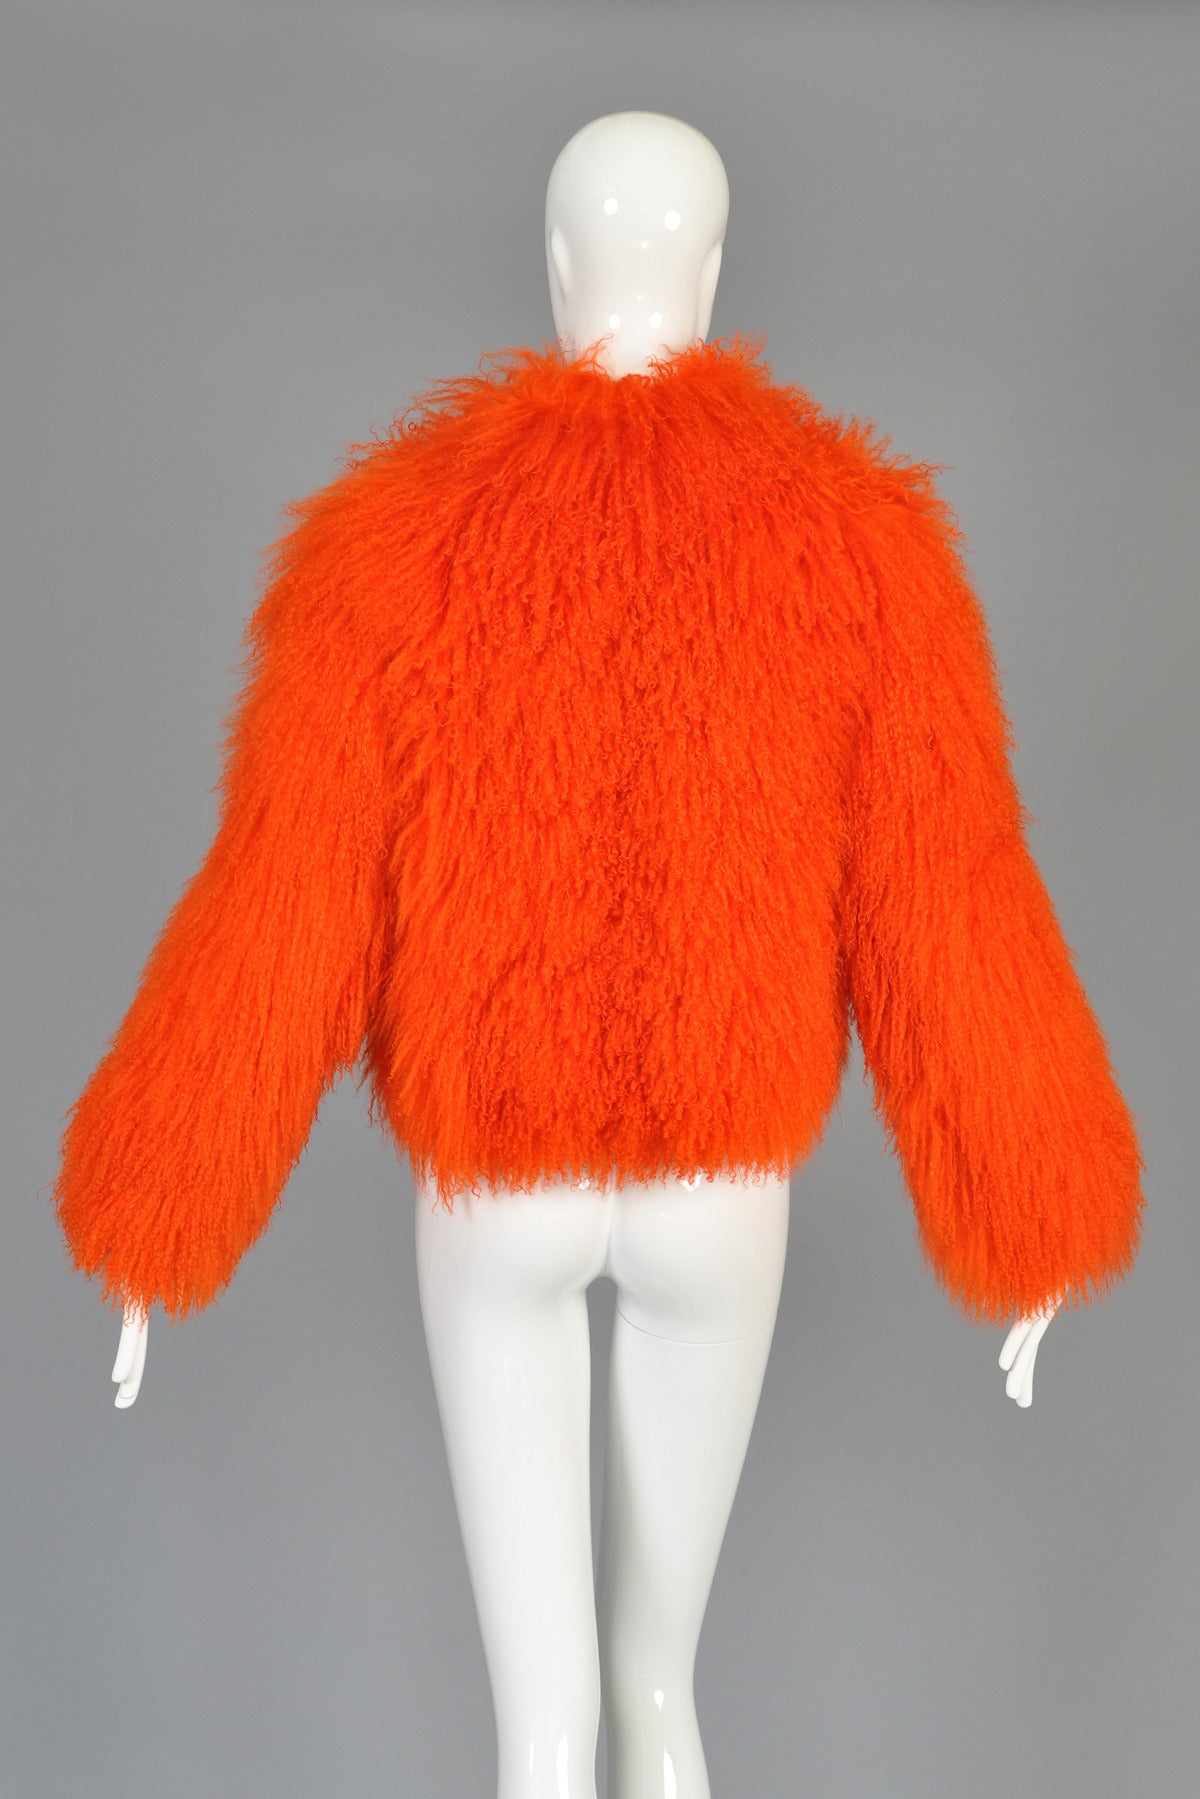 Sonia Rykiel Cropped Day-Glo Orange Mongolian Lamb Fur Coat 1